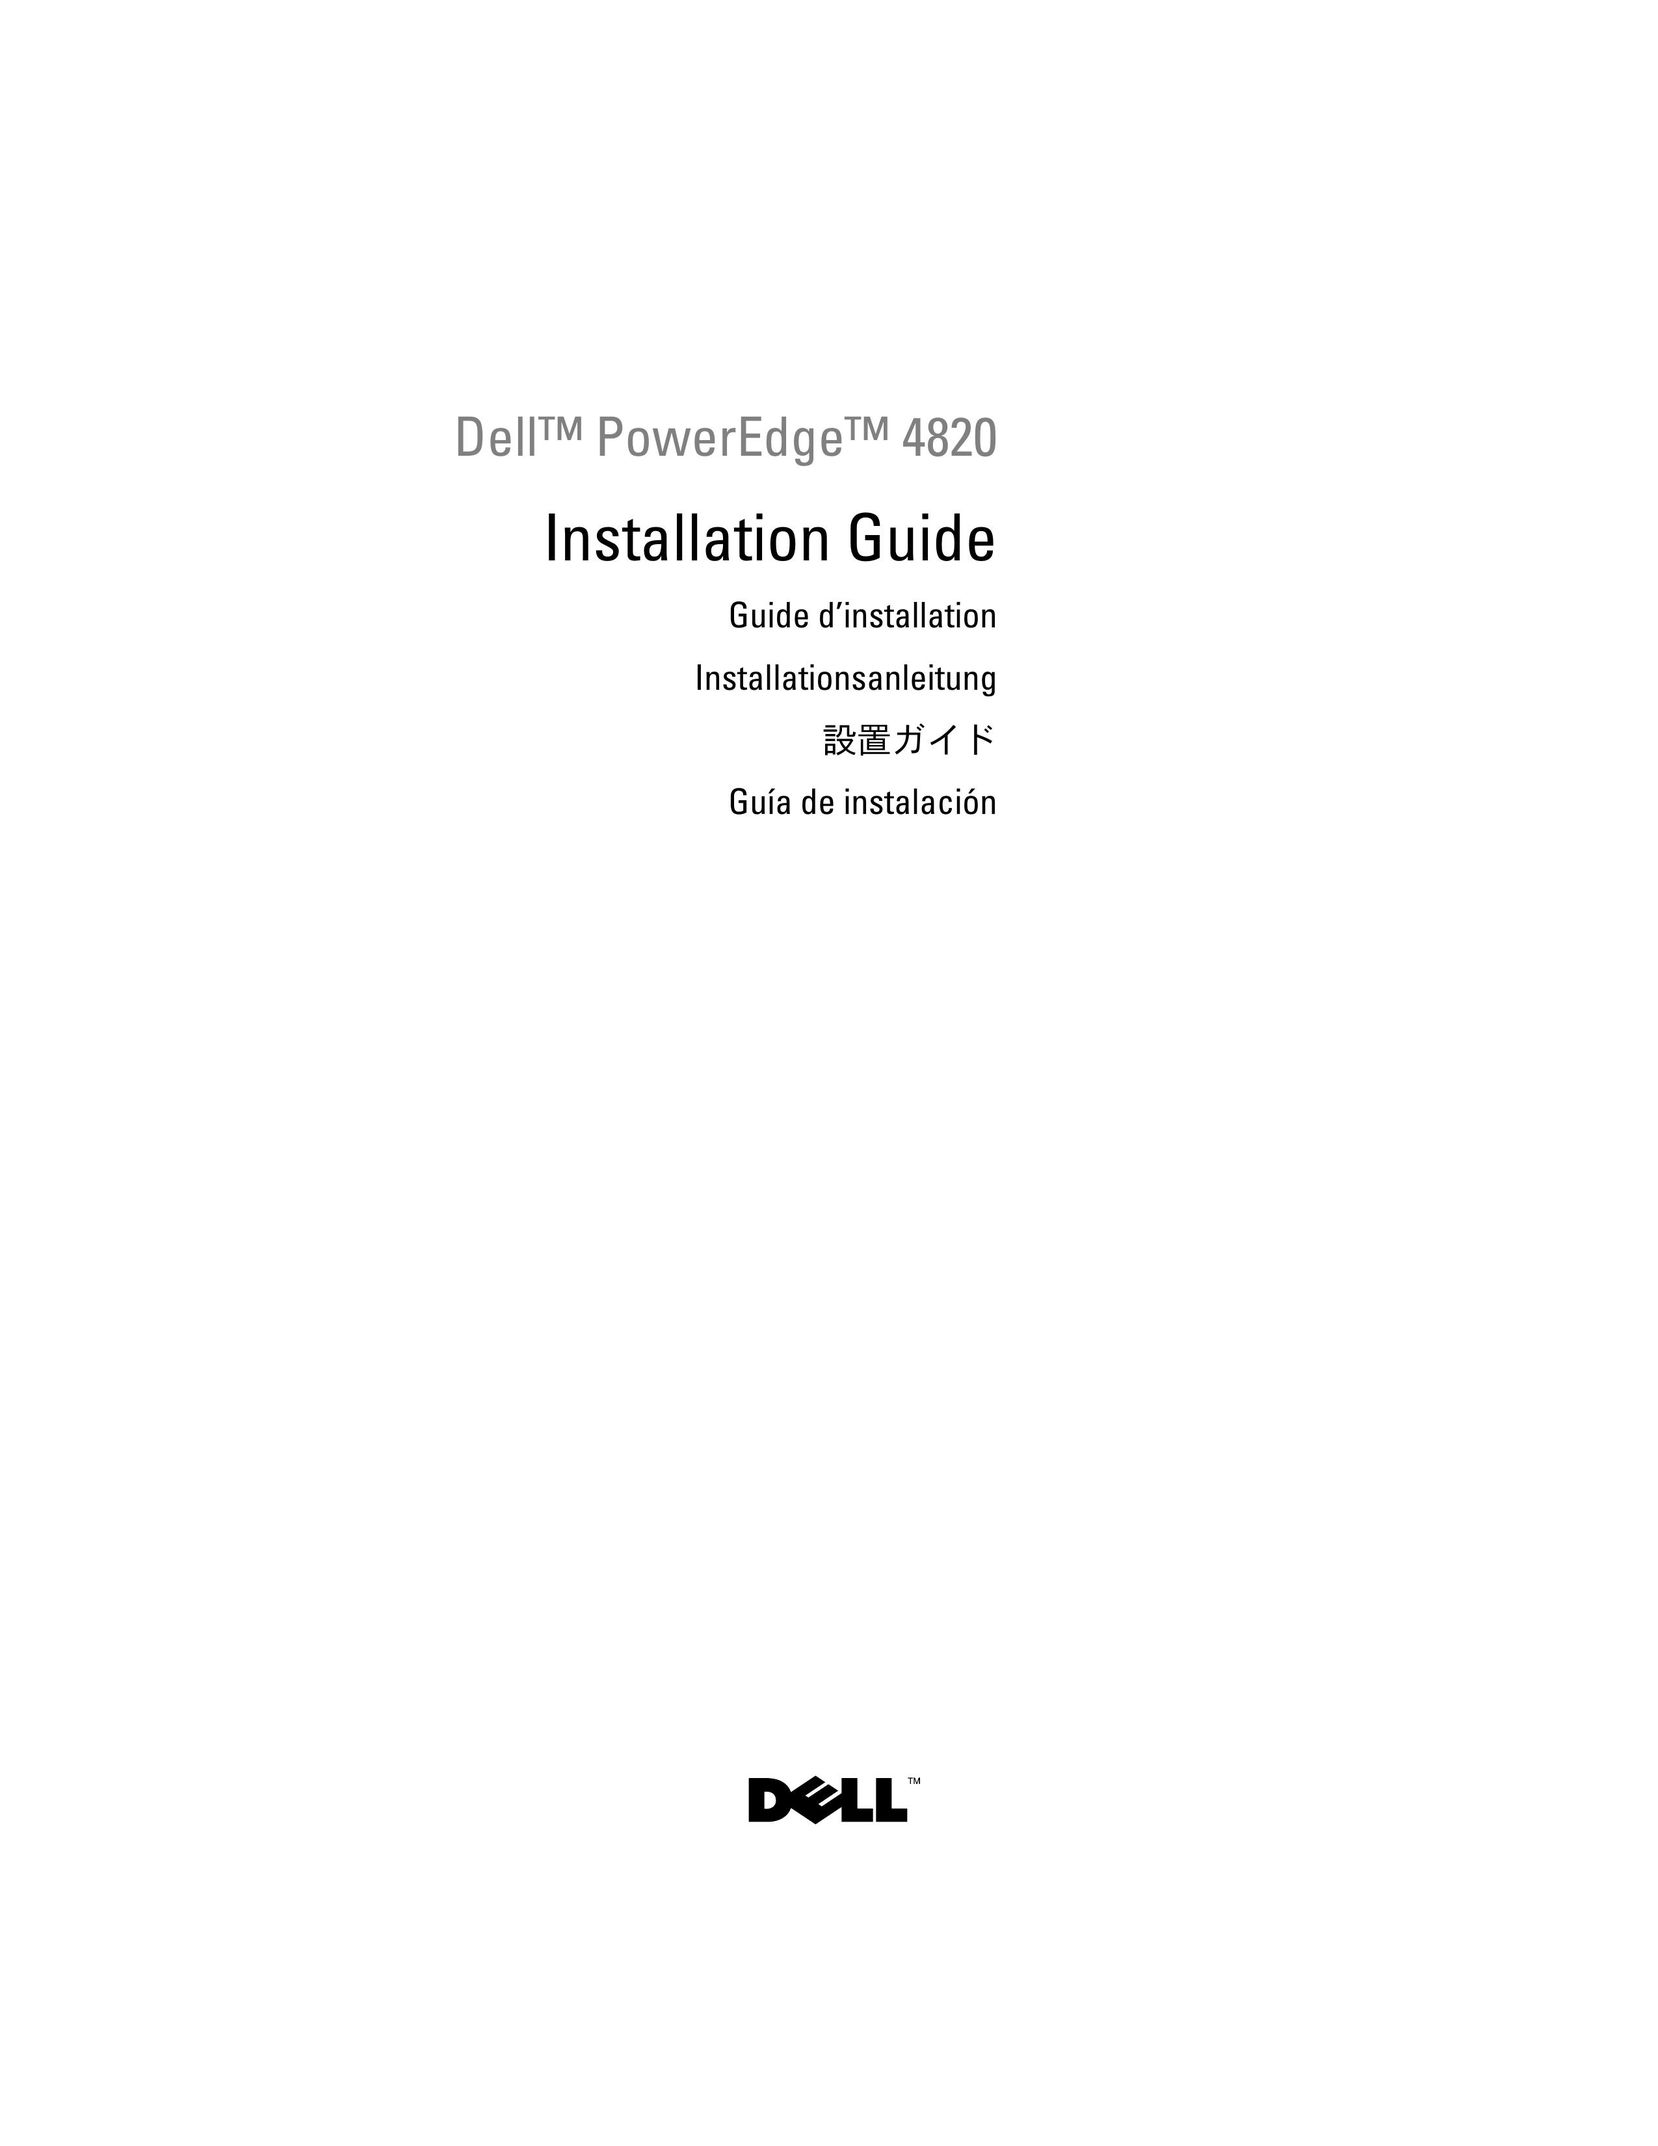 Dell 21DXJ Server User Manual